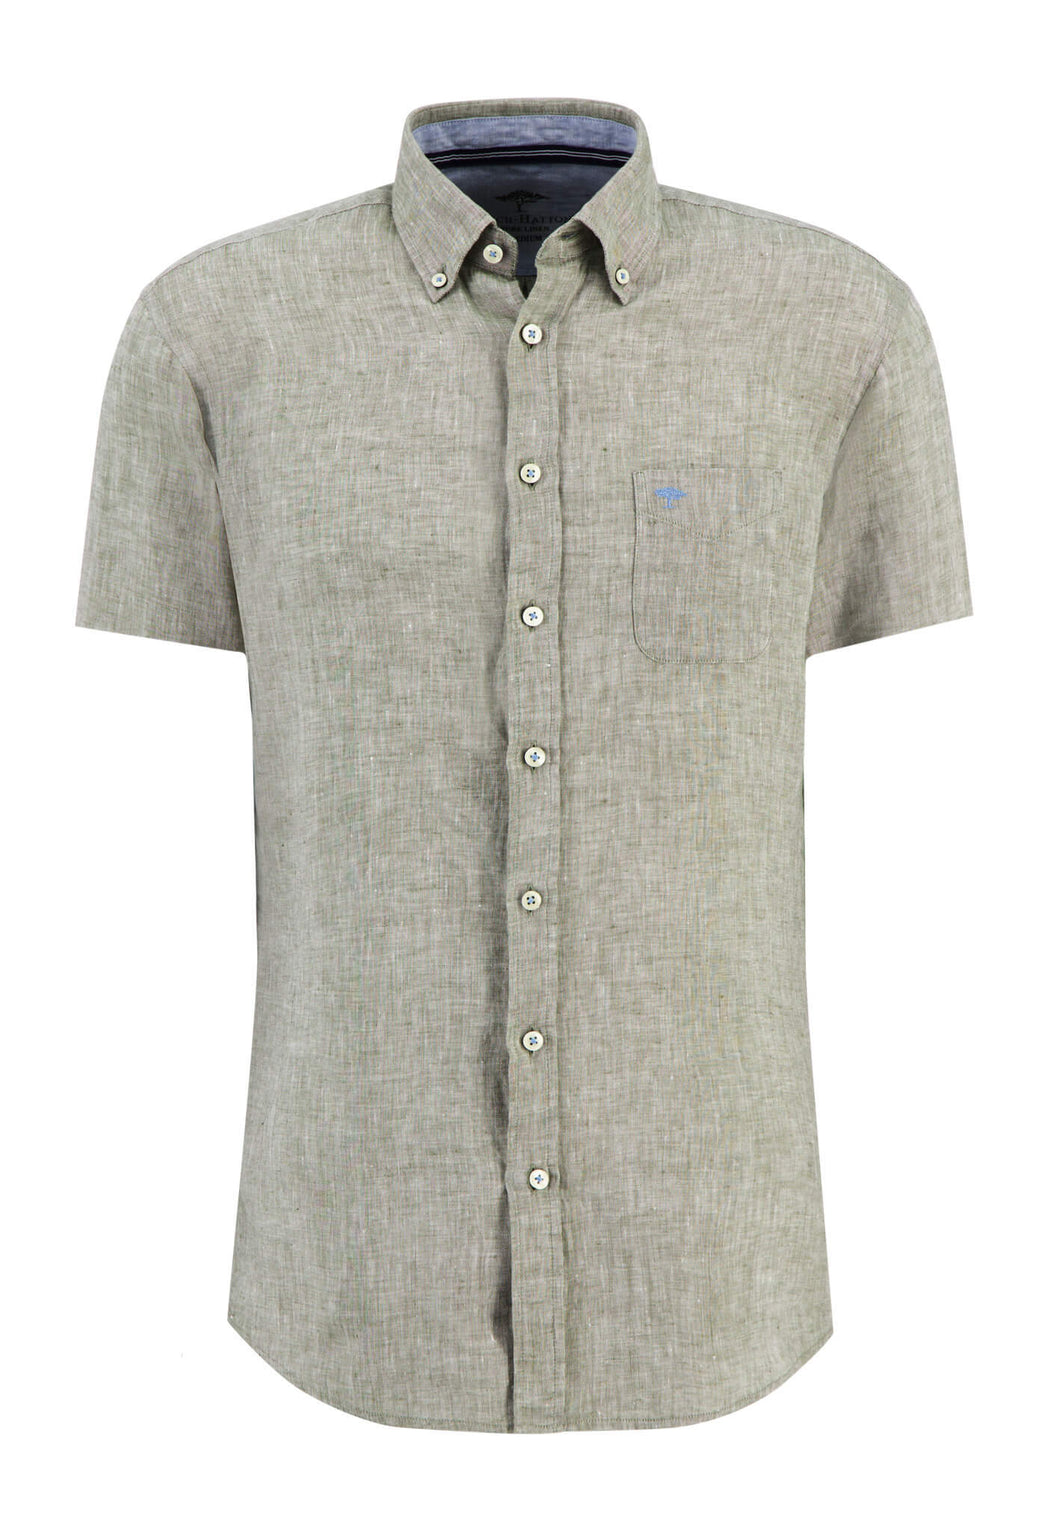 New Fynch Hatton Olive Linen Short Sleeve Shirt